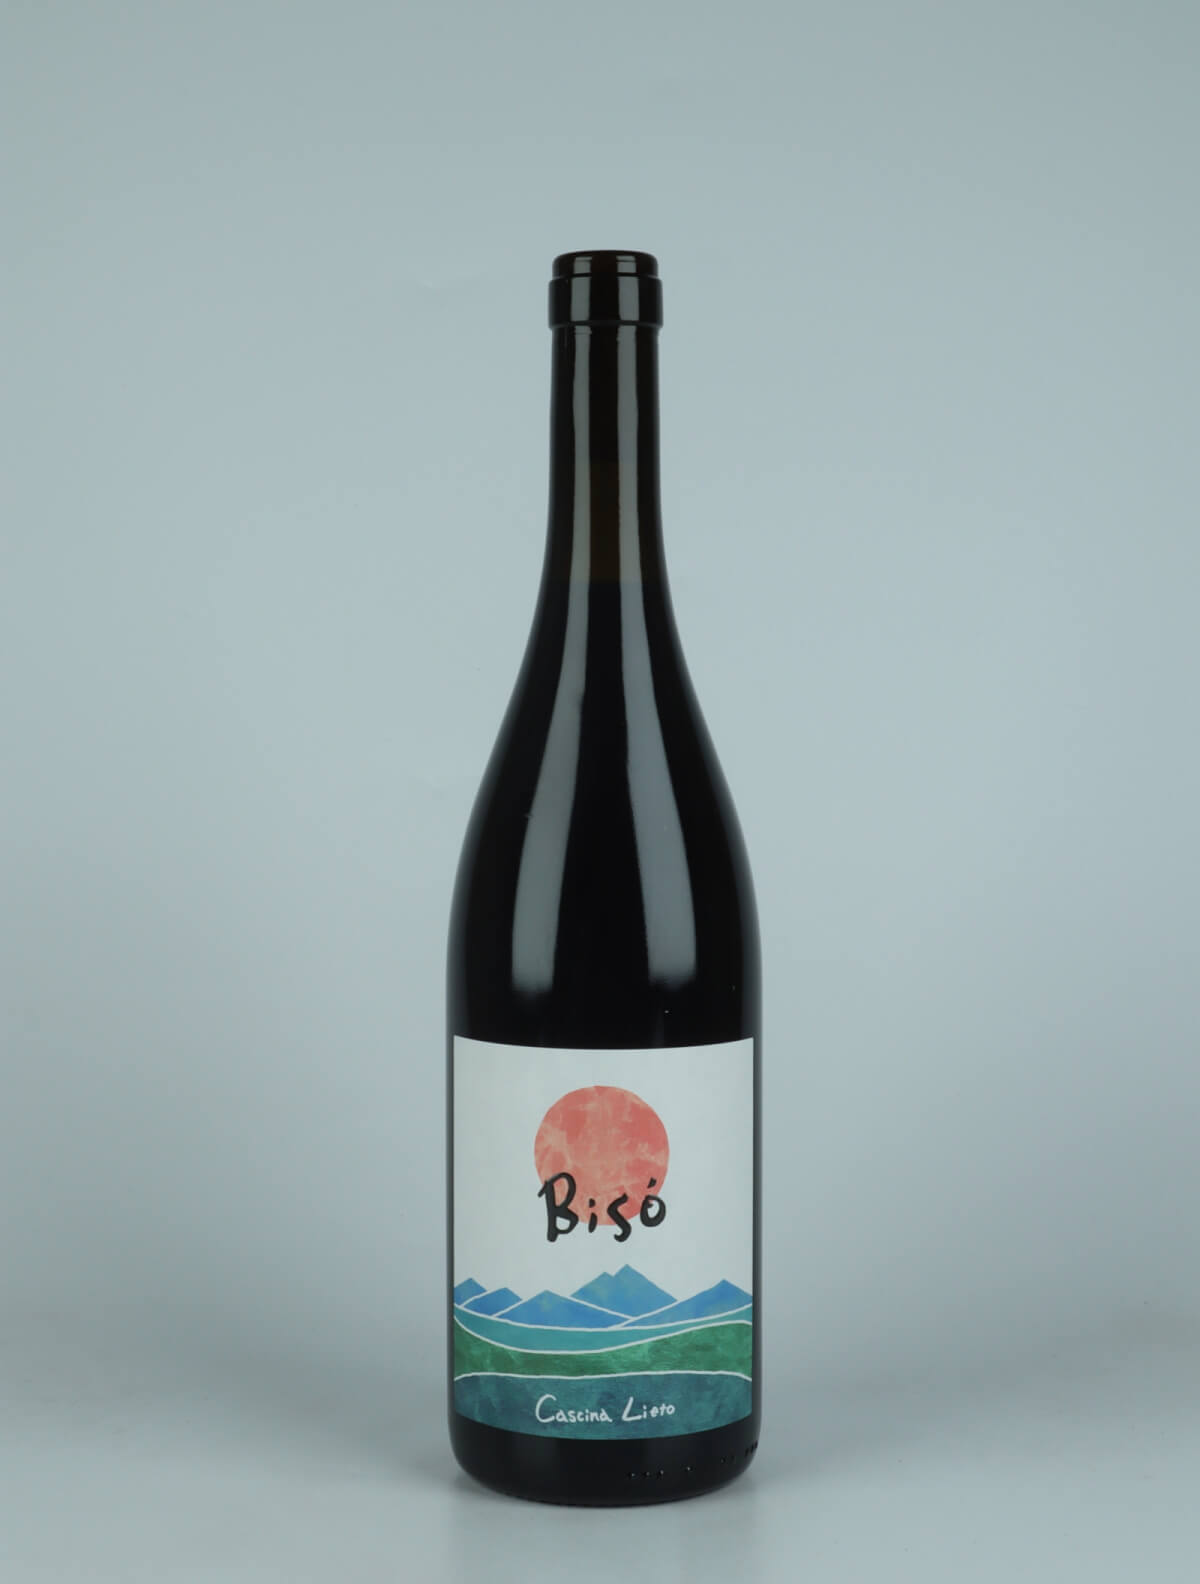 A bottle 2021 Rosso Bisò Red wine from Cascina Lieto, Piedmont in Italy